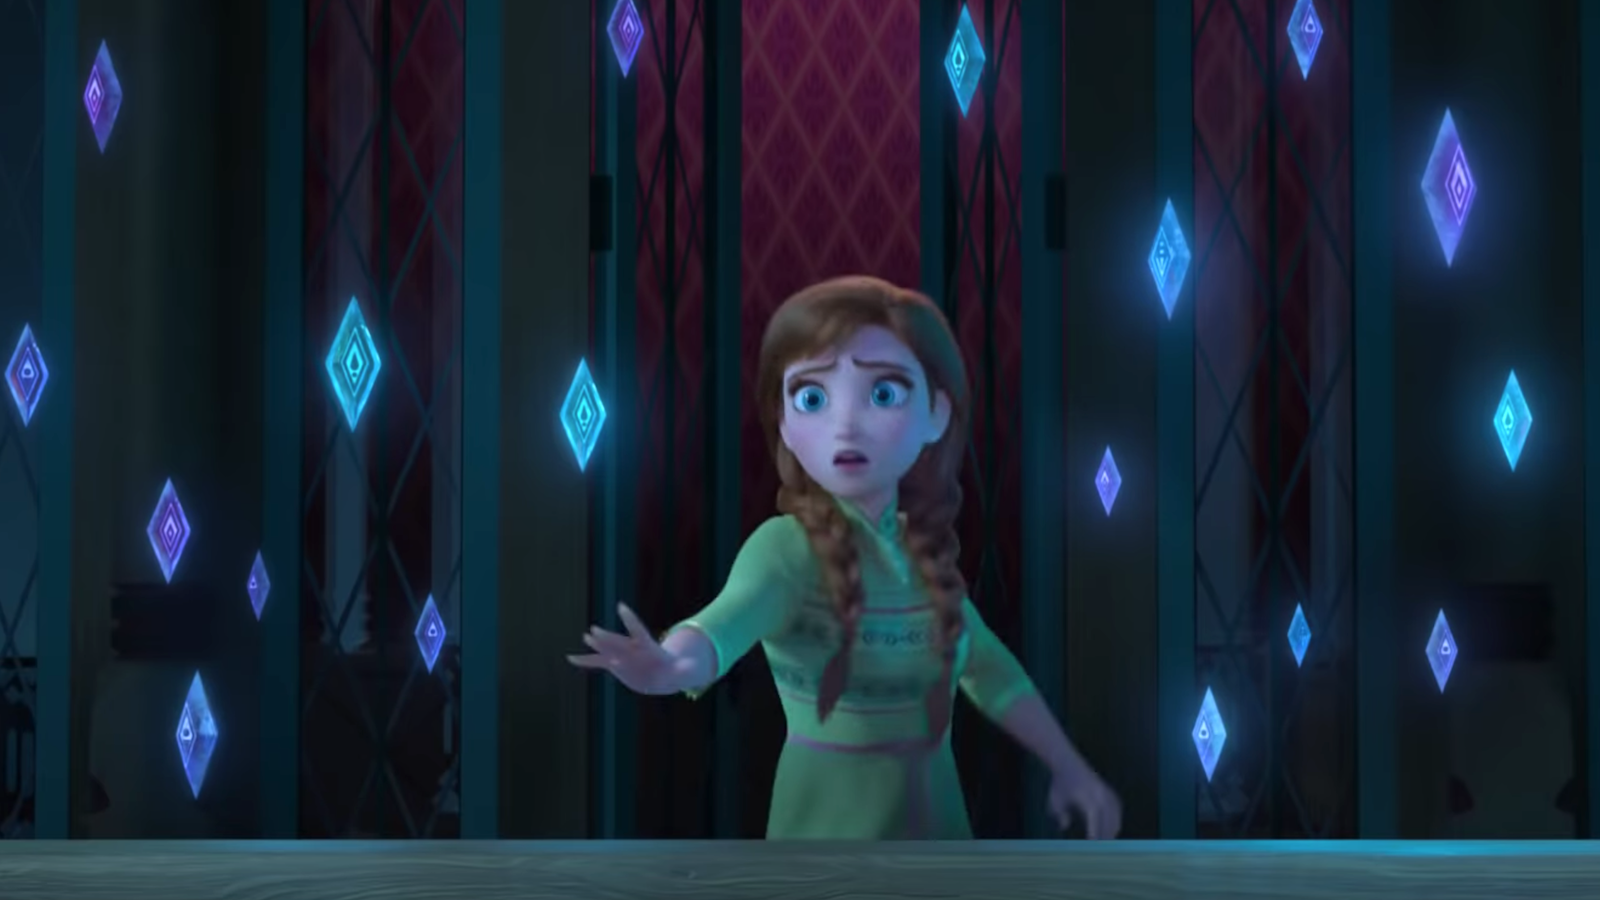 Pôster de Frozen 2 esconde segredos, indica diretora